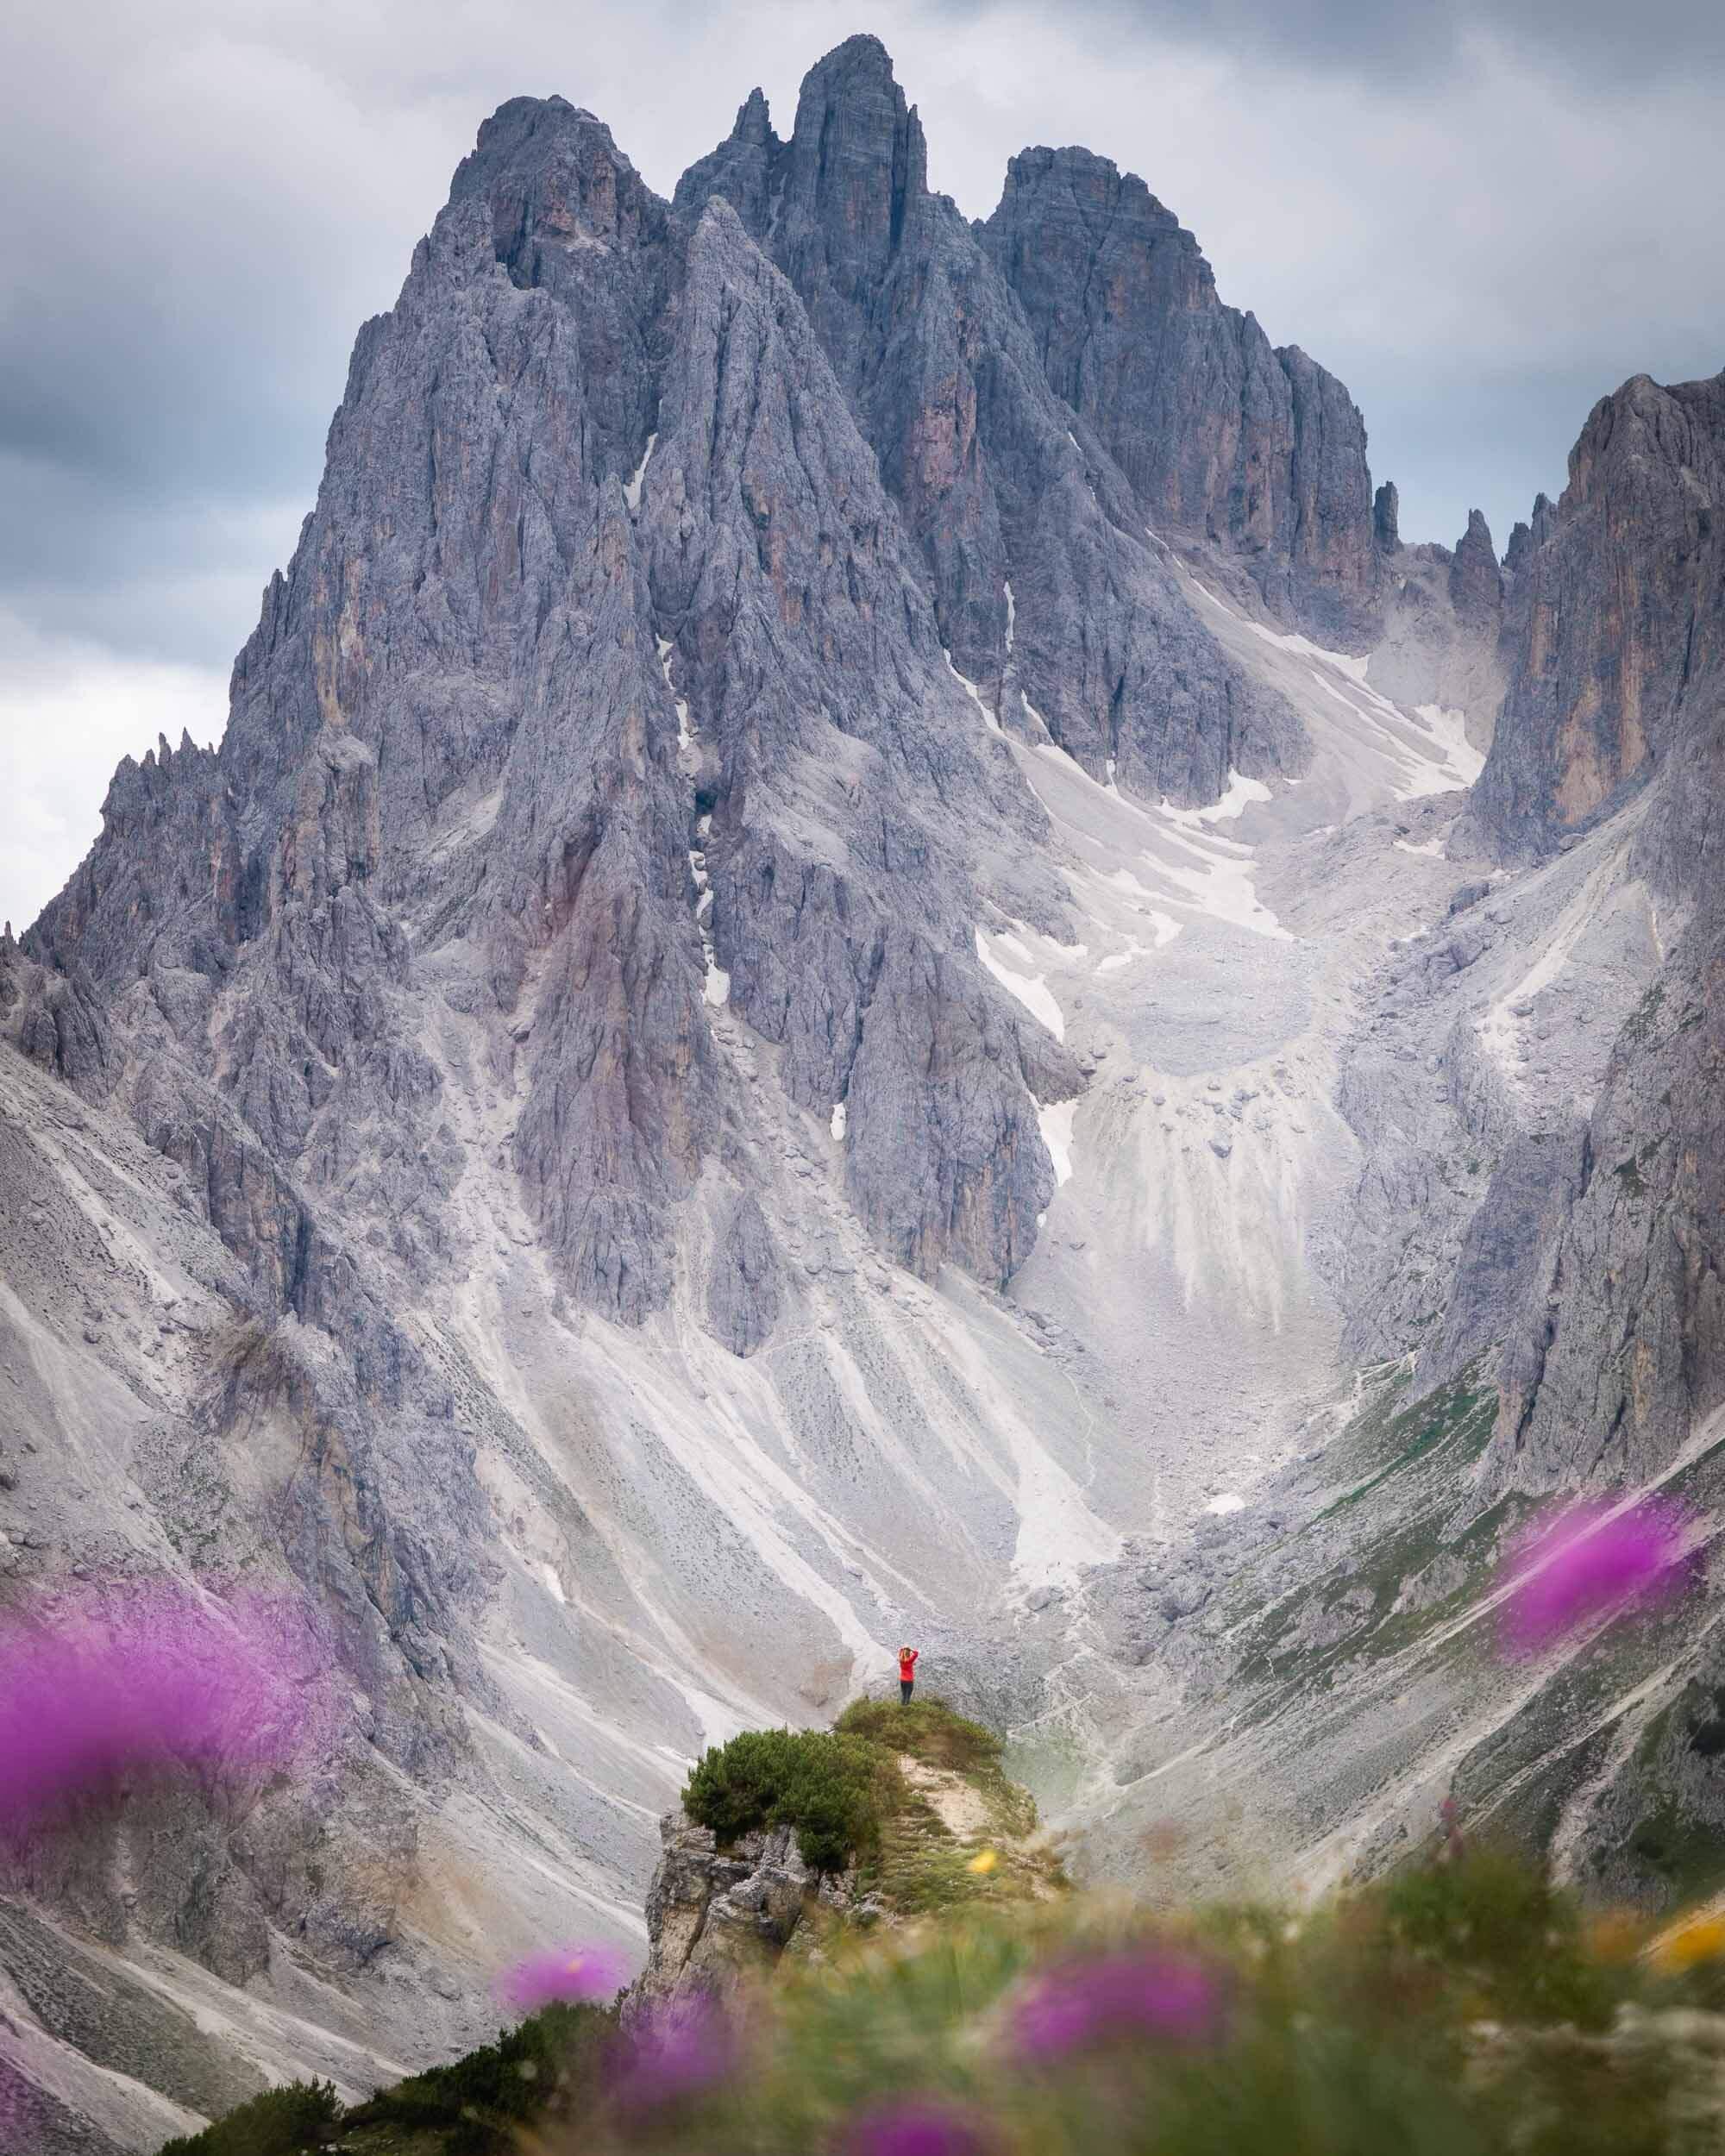 Tre Cime di Lavaredo (Three Peaks) in the Italian Dolomites is a hiking paradise.